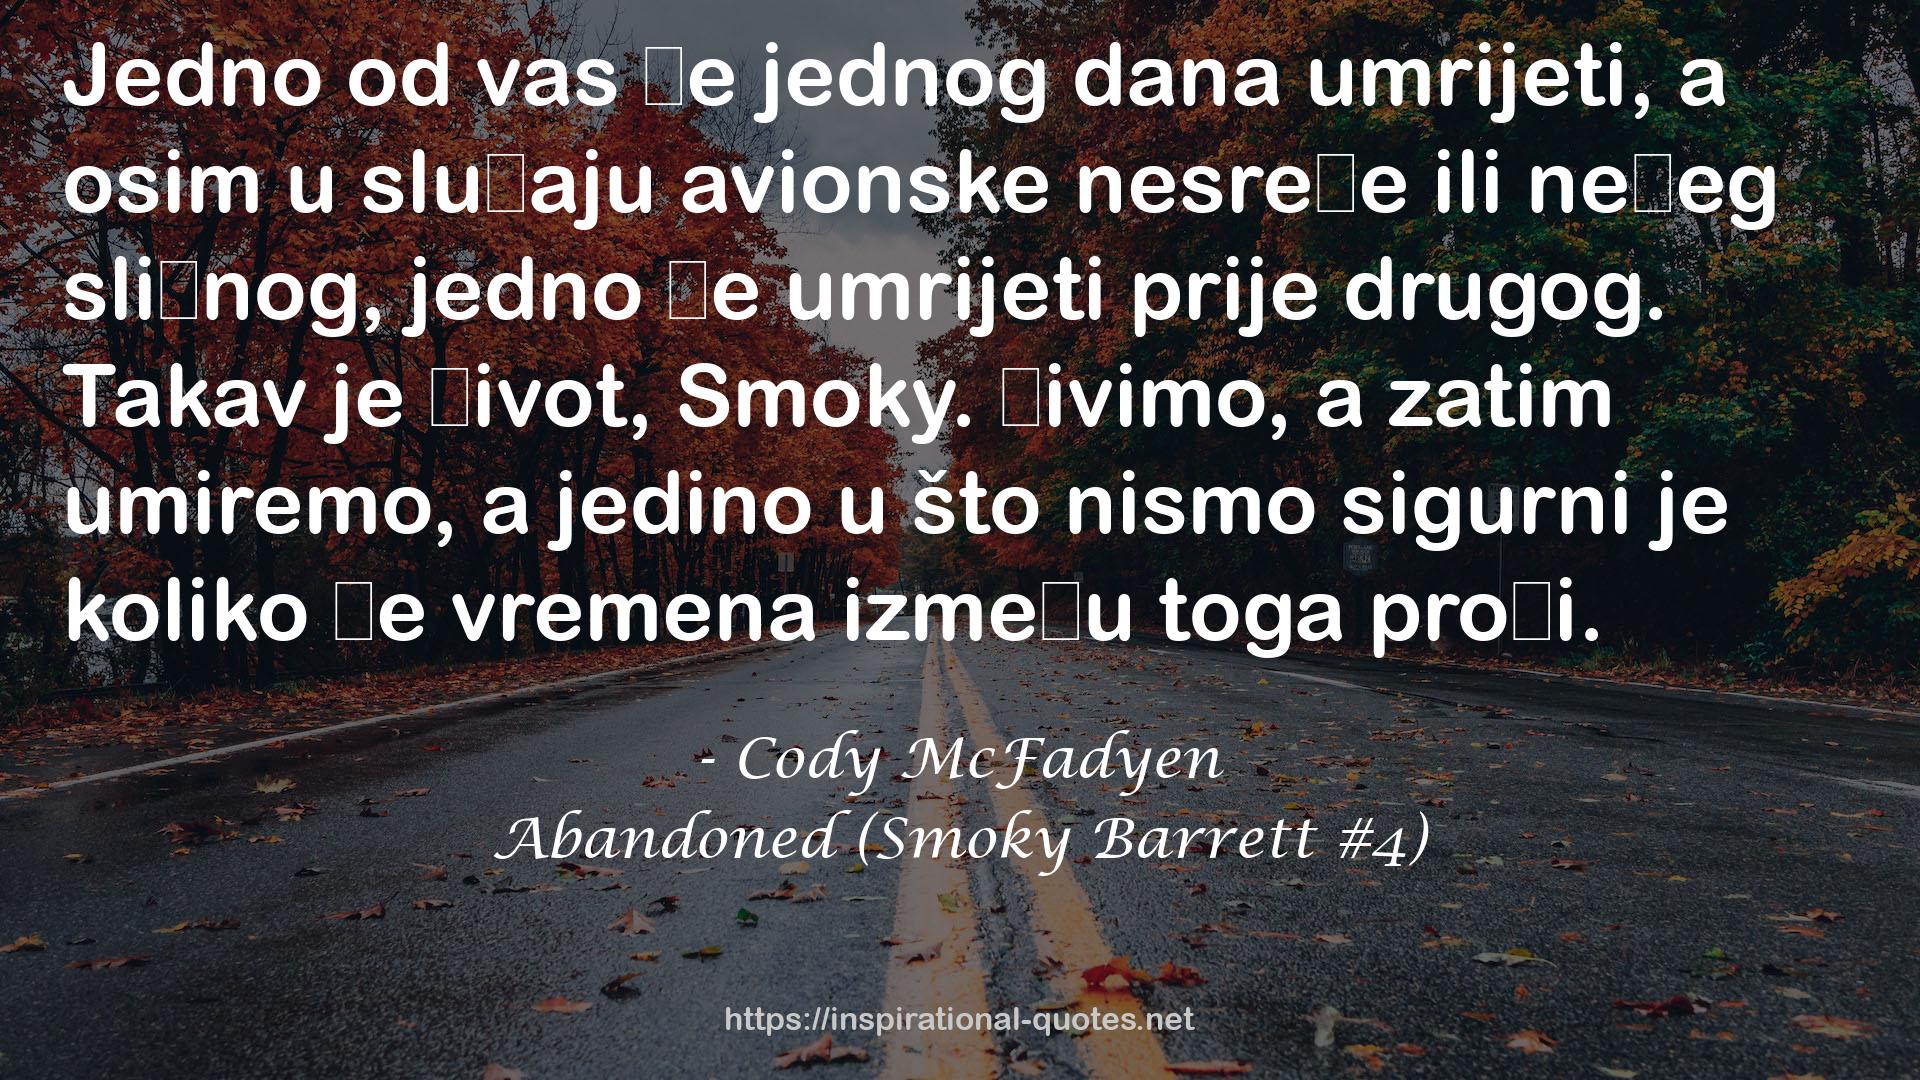 Abandoned (Smoky Barrett #4) QUOTES